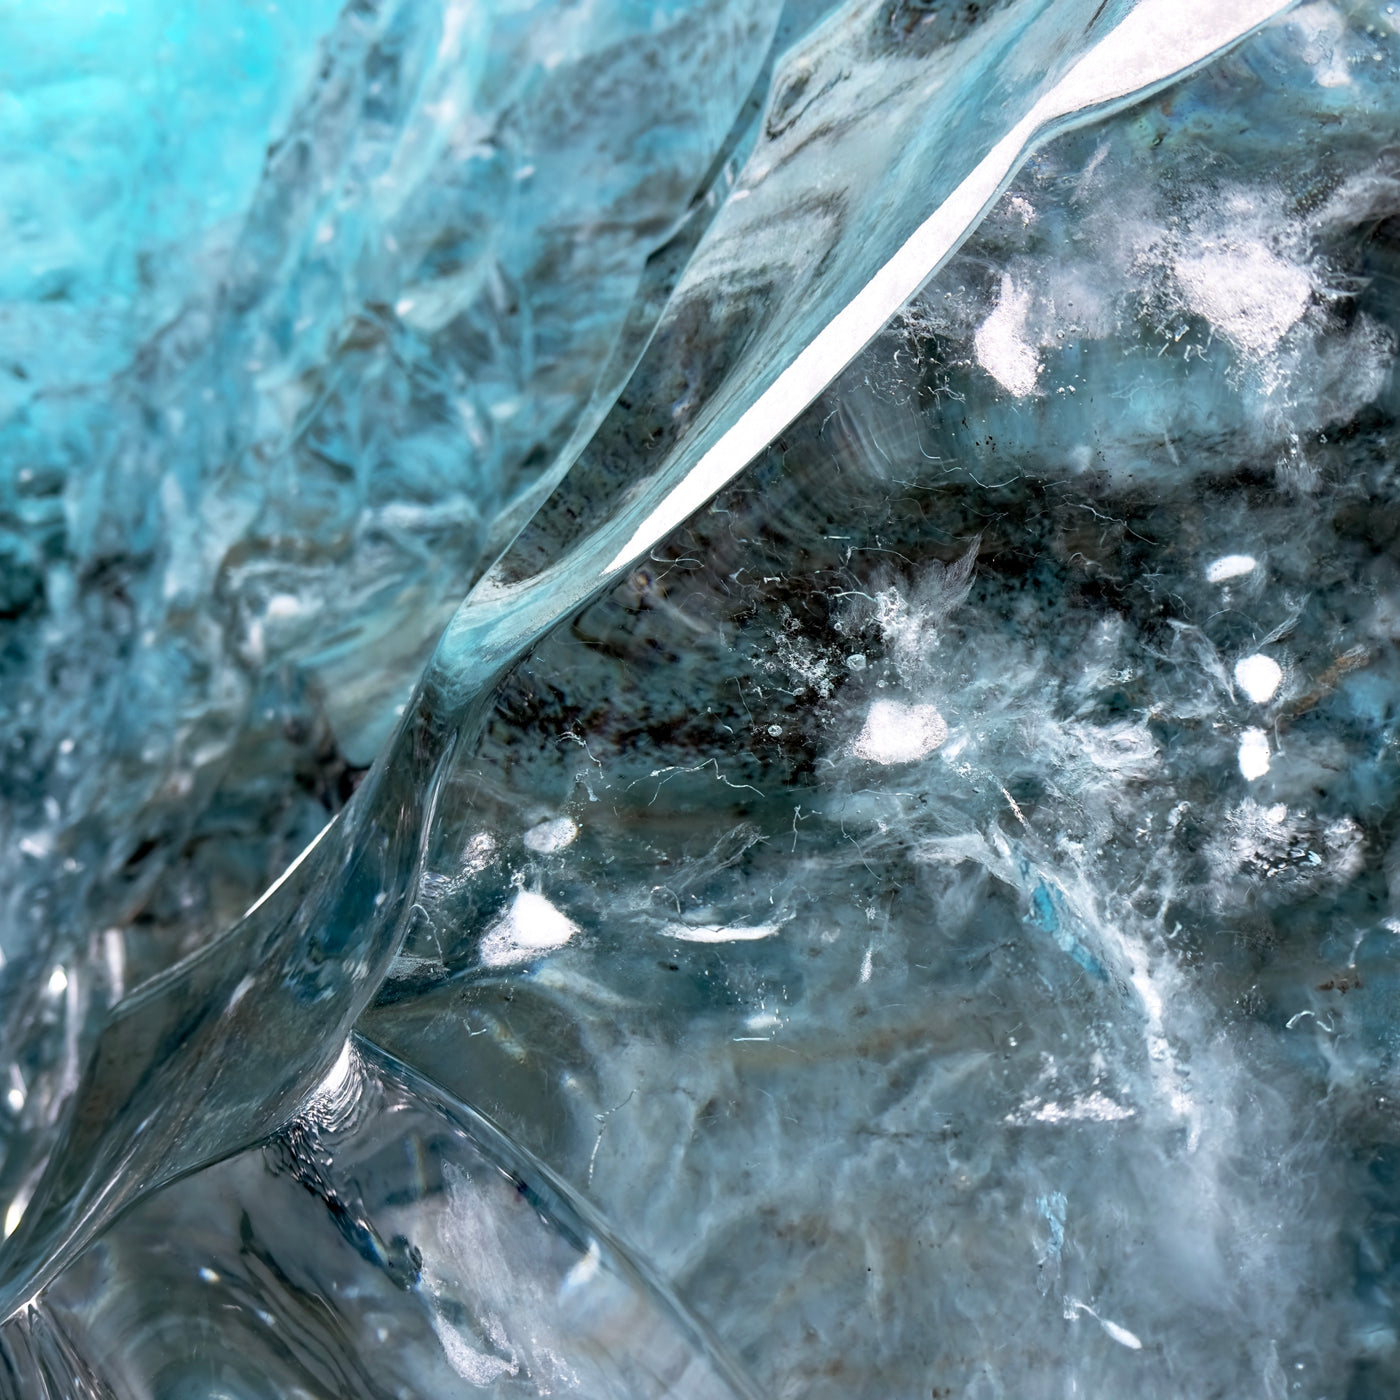 SD36 Iceland: Ice Marimba